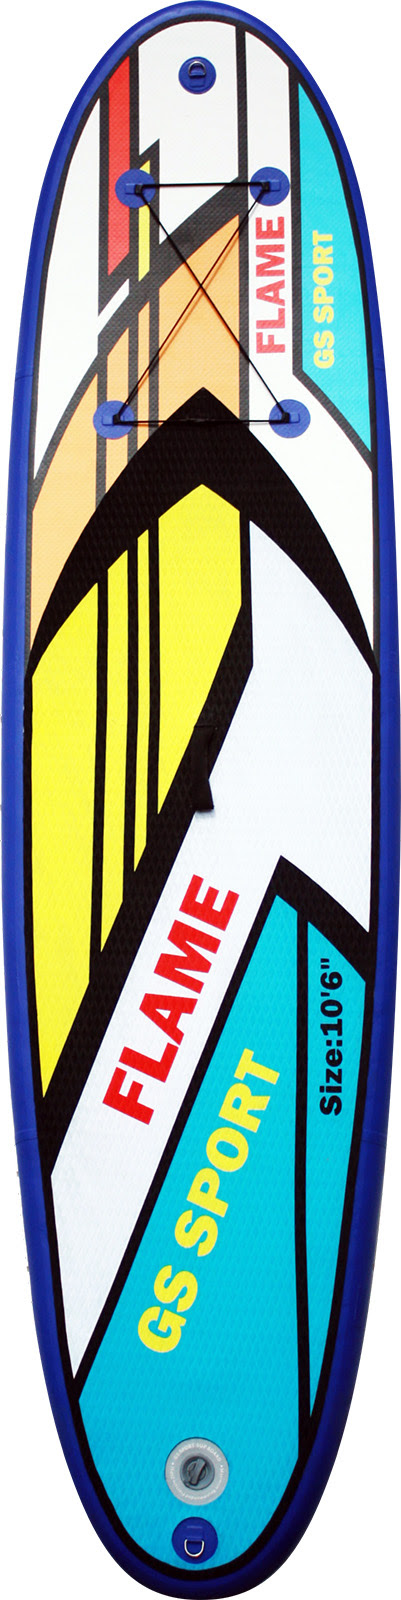 GS SPORT - Надувная SUP-доска для серфинга «FLAME»